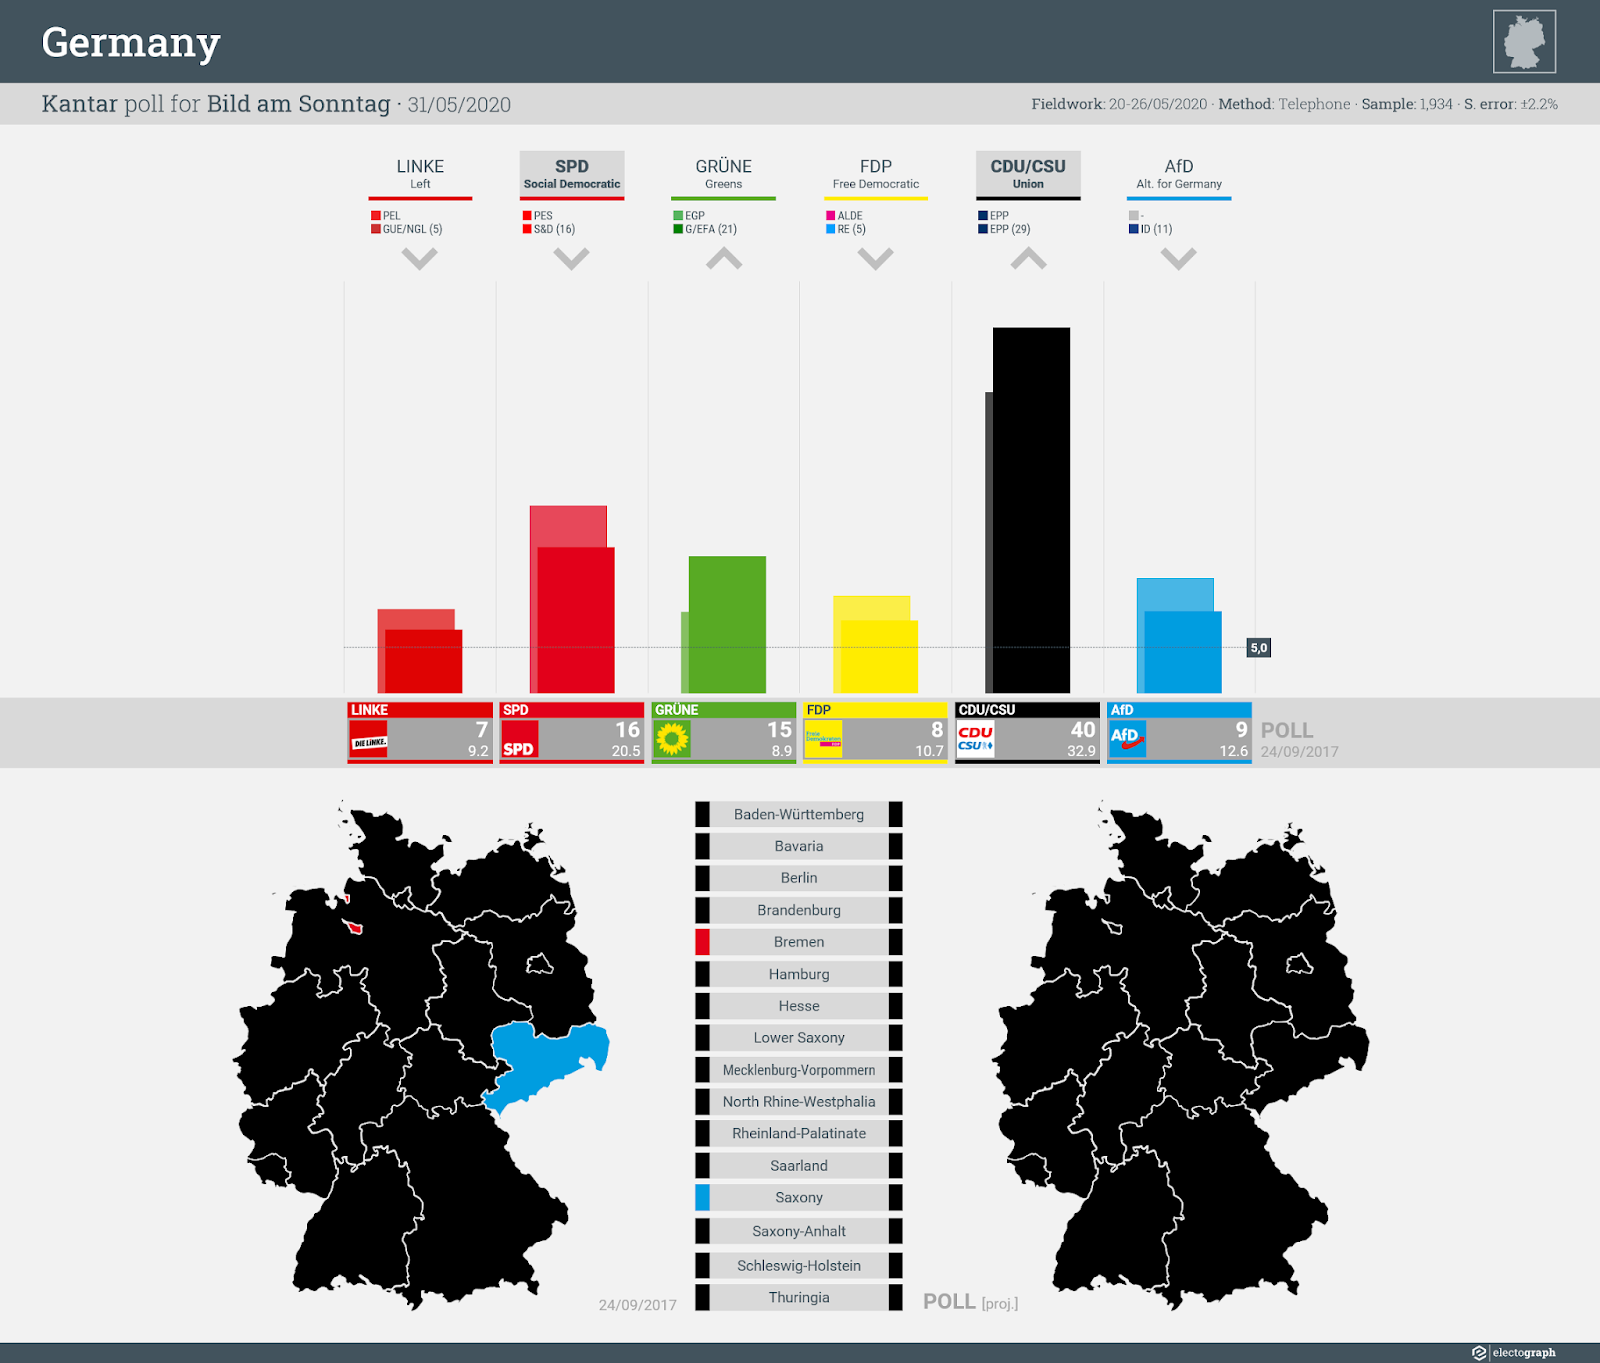 GERMANY: Kantar poll chart for Bild am Sonntag, 31 May 2020